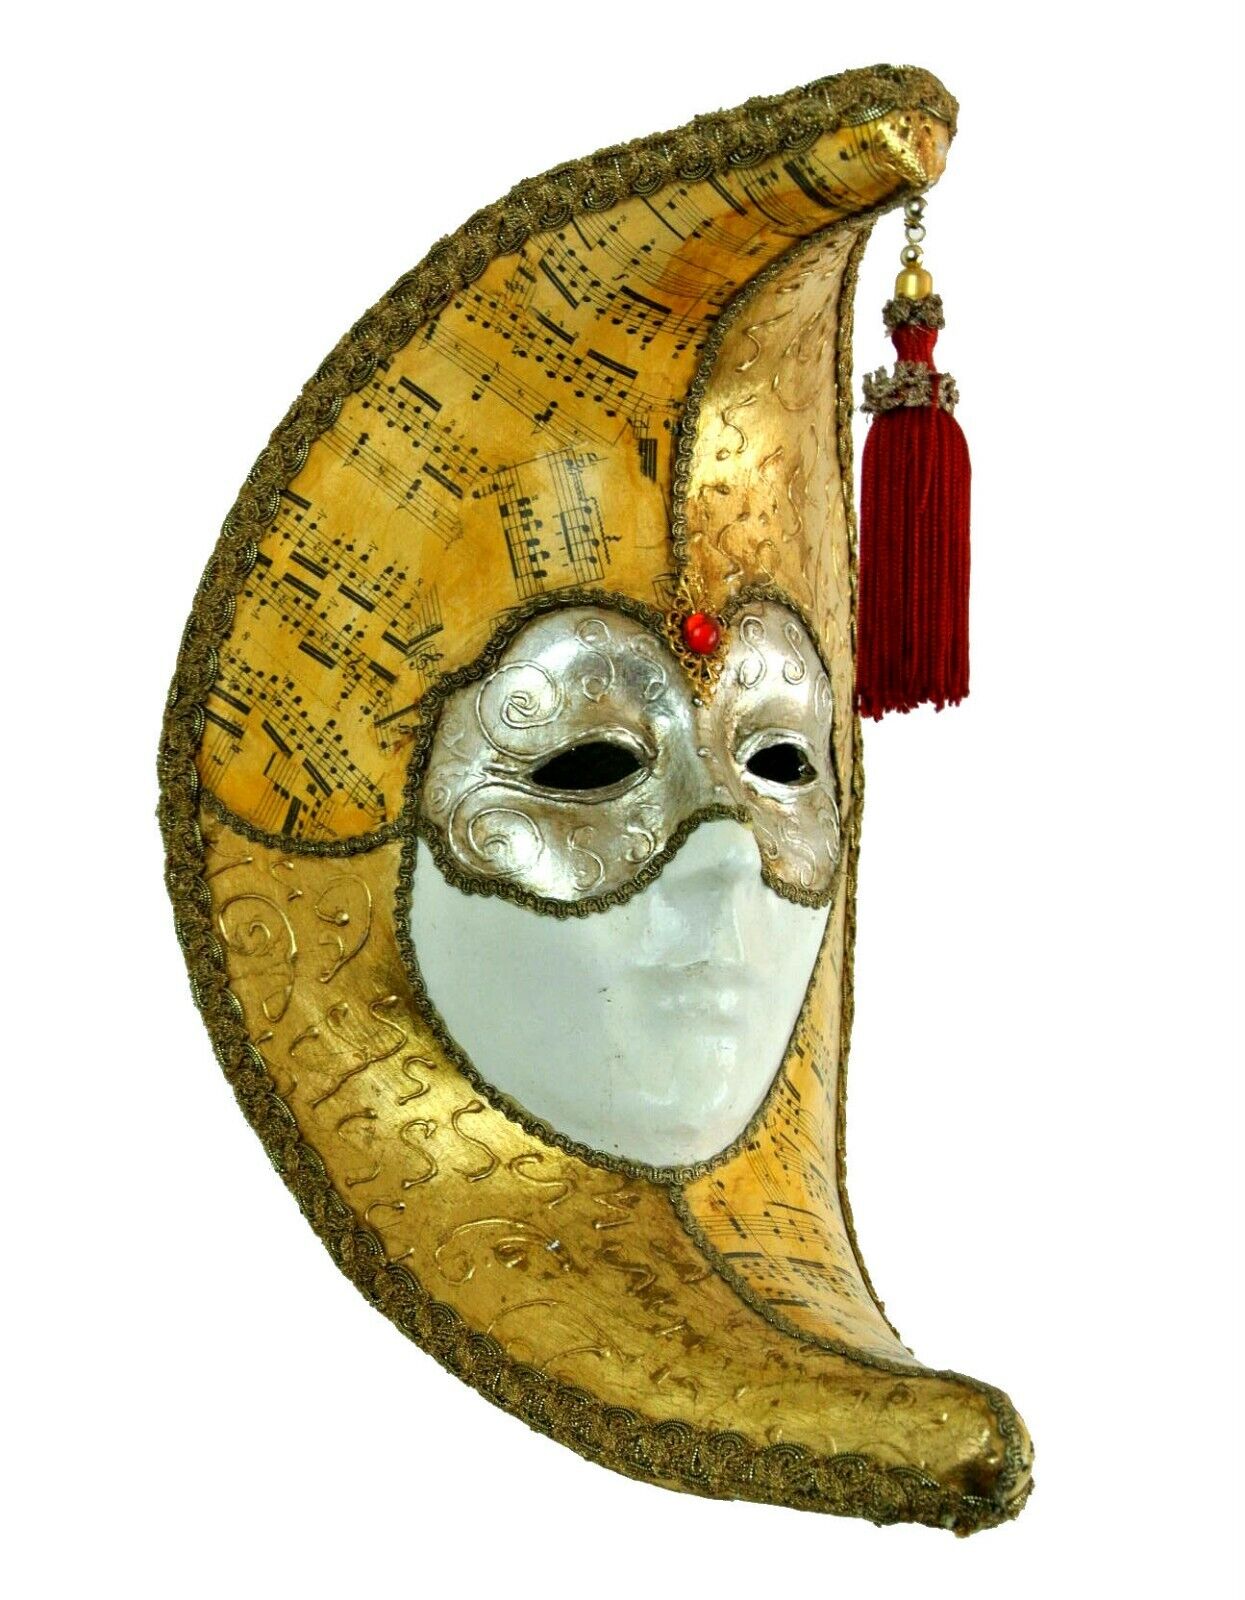 Authentic Large Italian Venetian Moon Mask Handmade in Venice, Italy